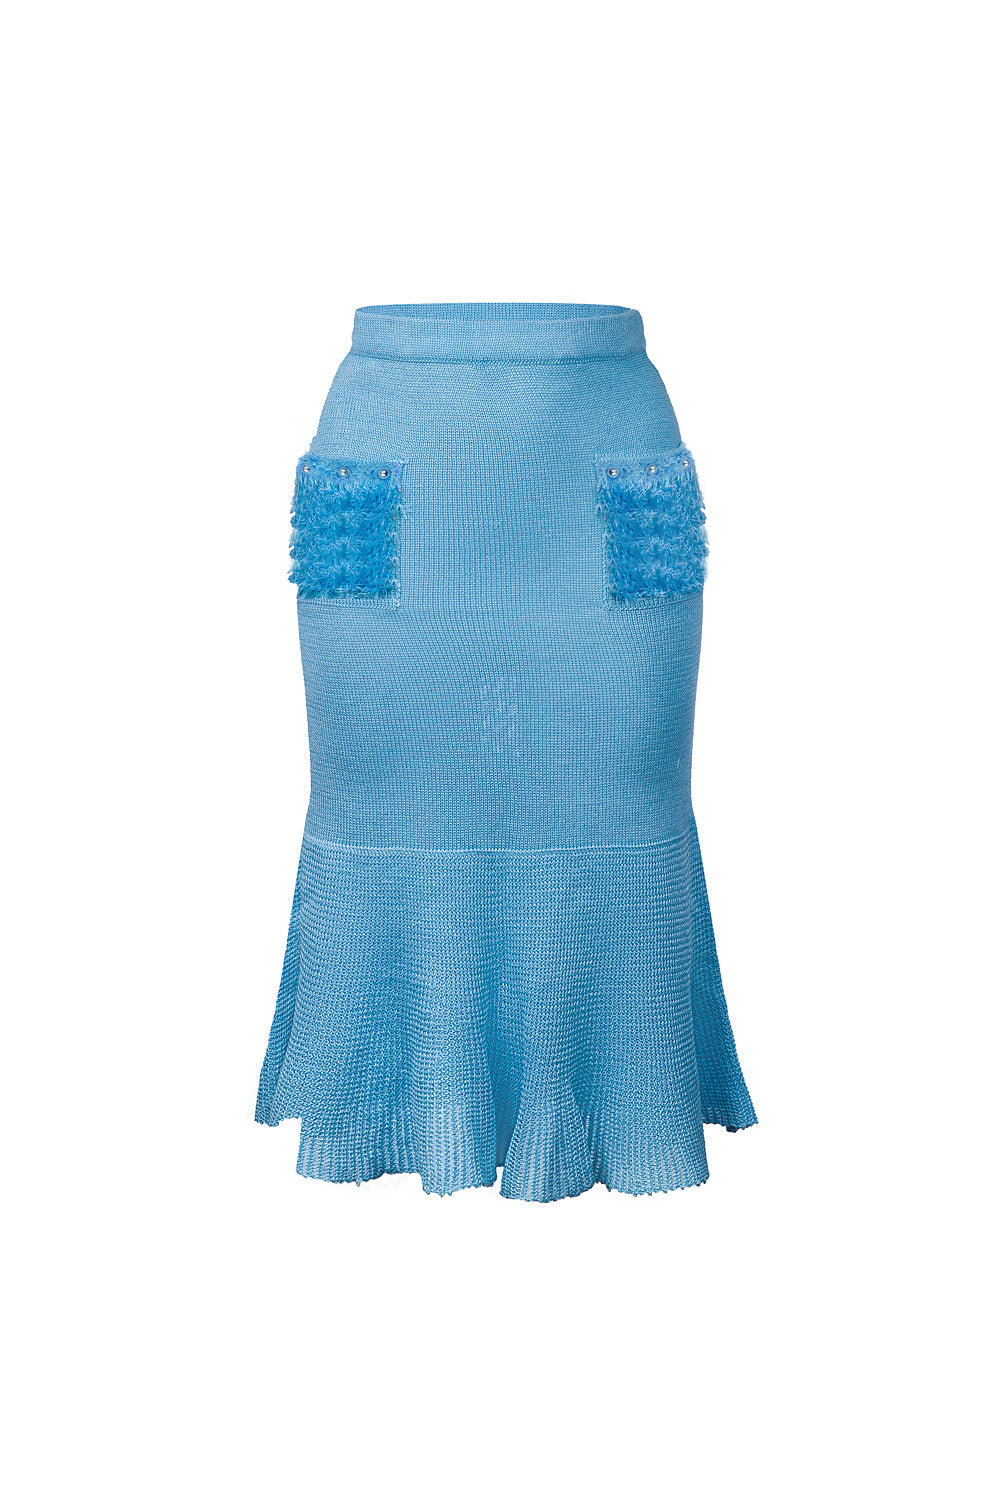 Baby Blue Knit Skirt